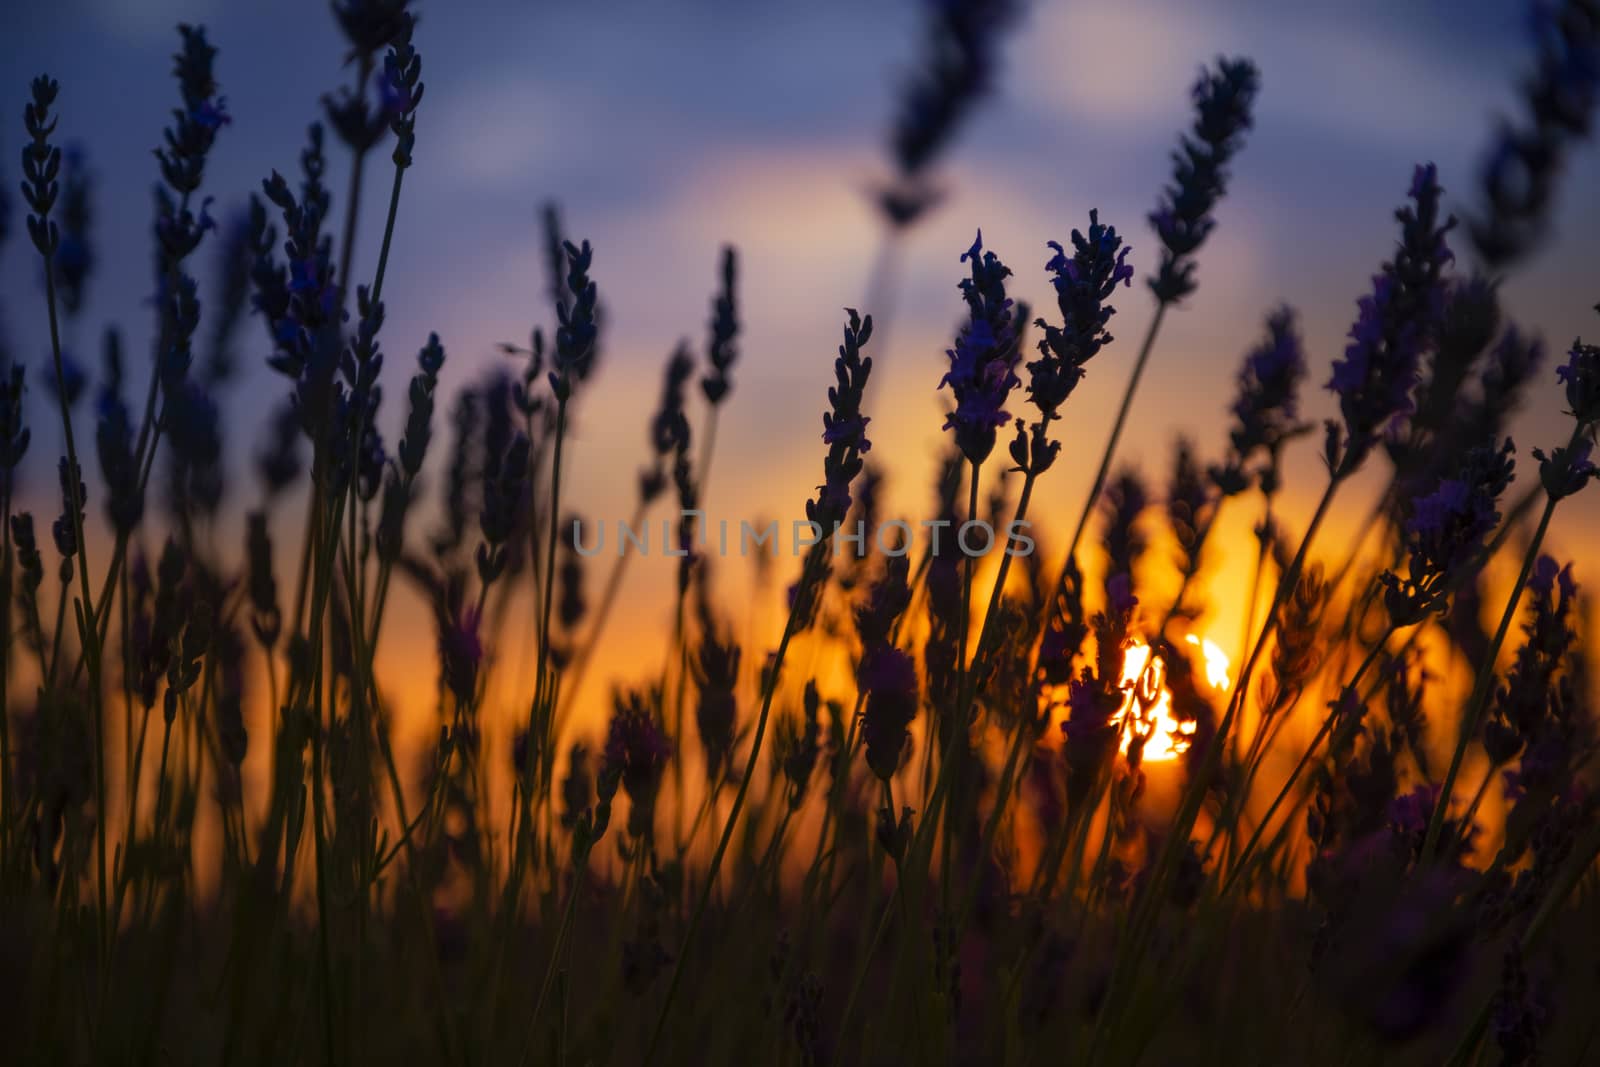 Silhouette in a lavender field in sunset by Nemida